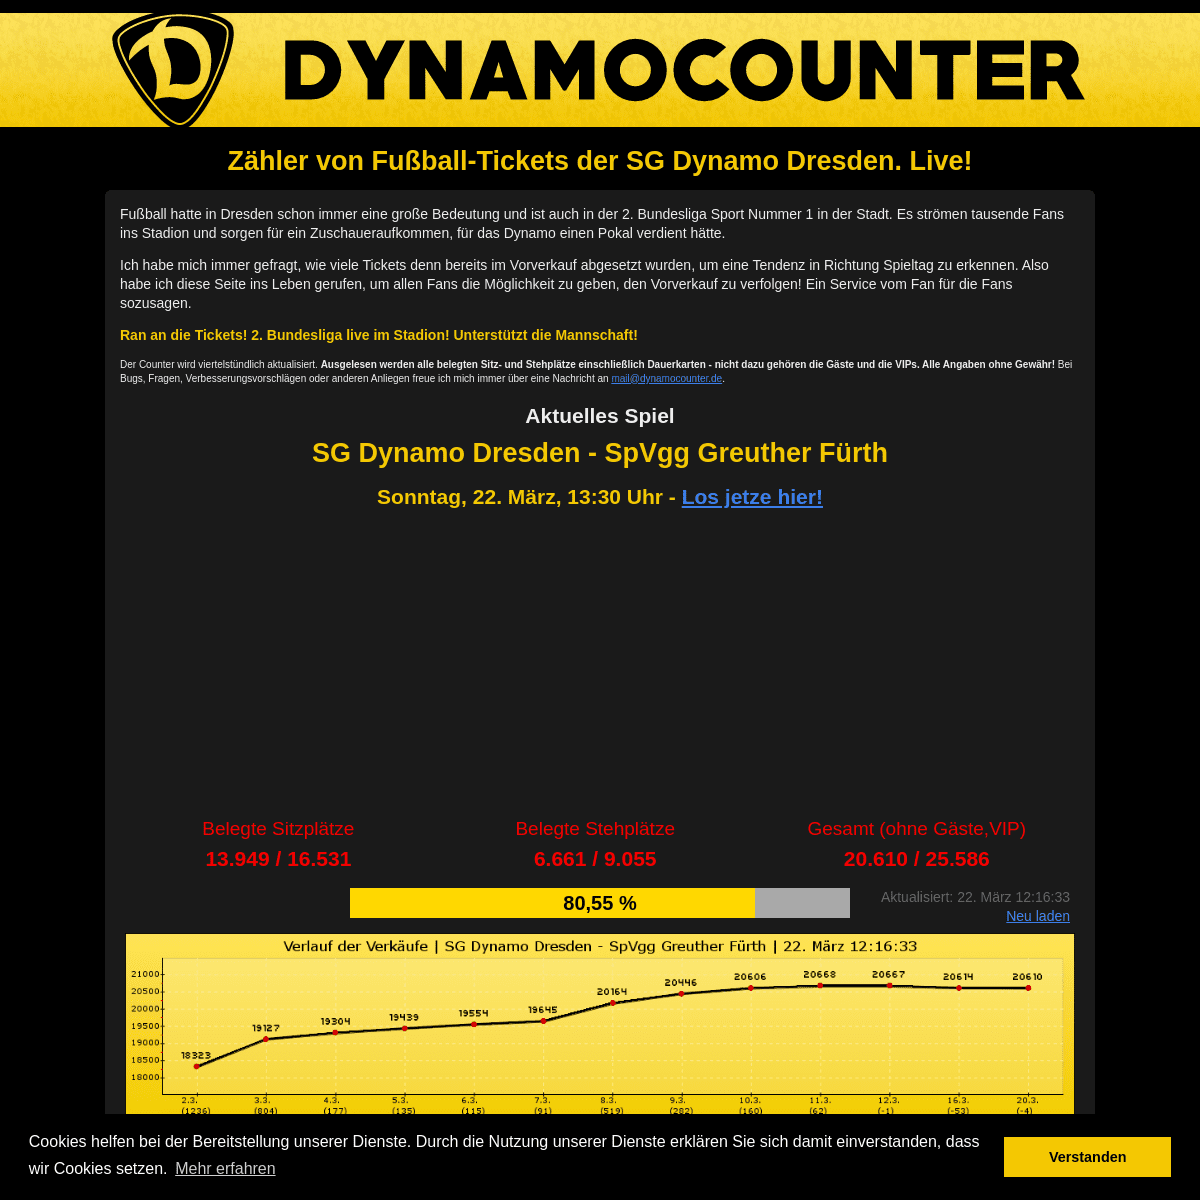 A complete backup of dynamocounter.de